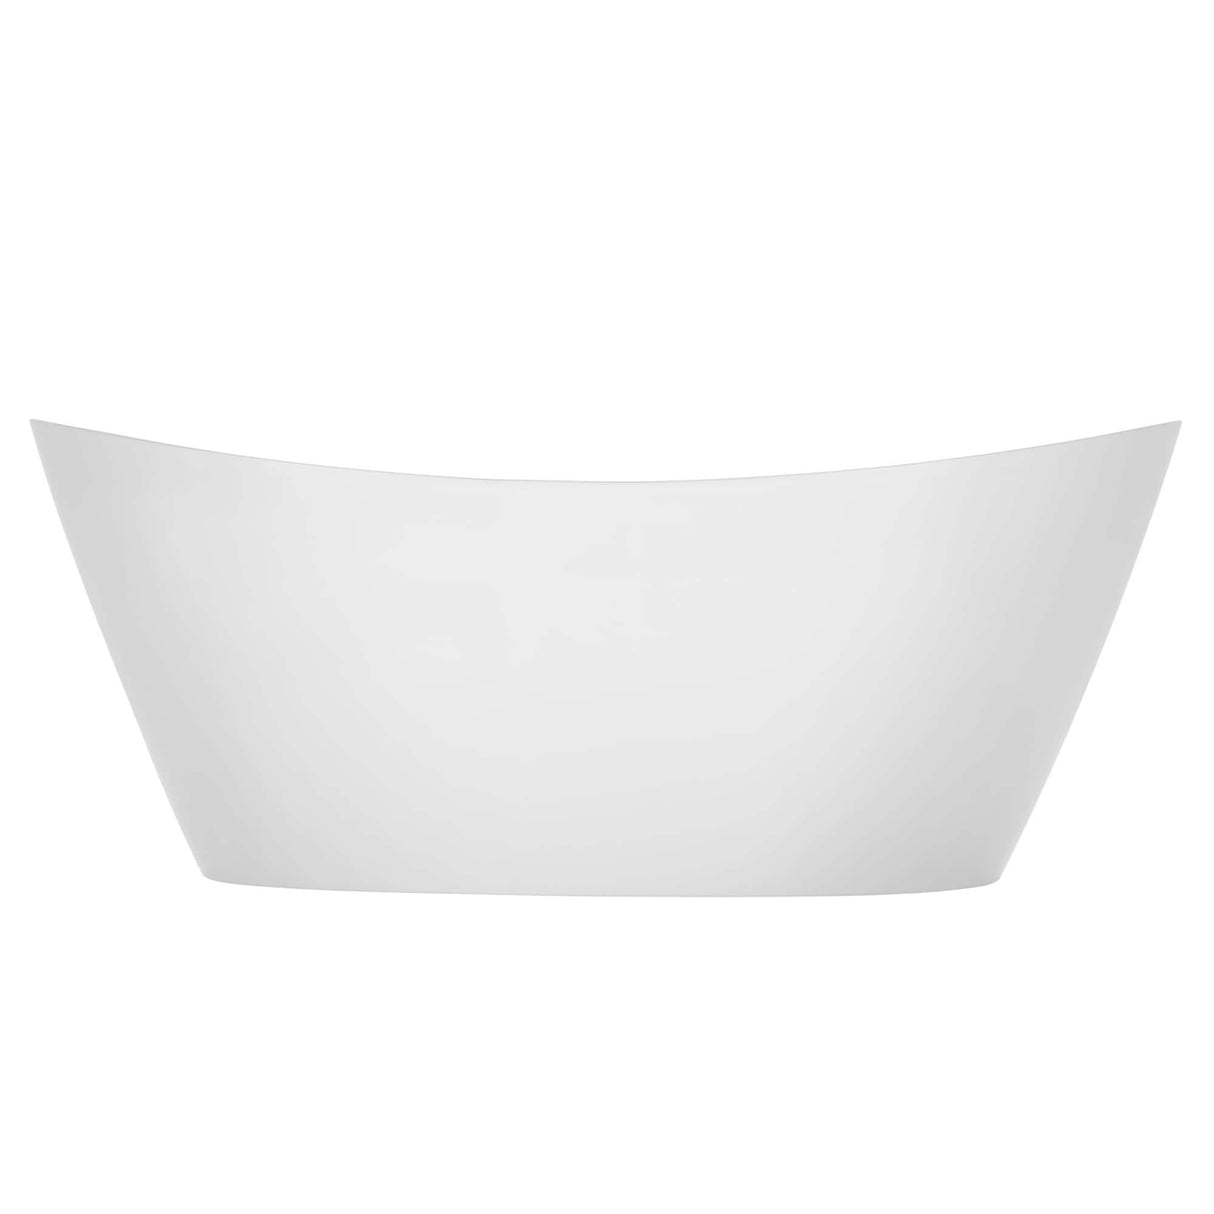 Empava-67FT1518LED freestanding acrylic soaking oval modern white SPA bathtub with LED Lights